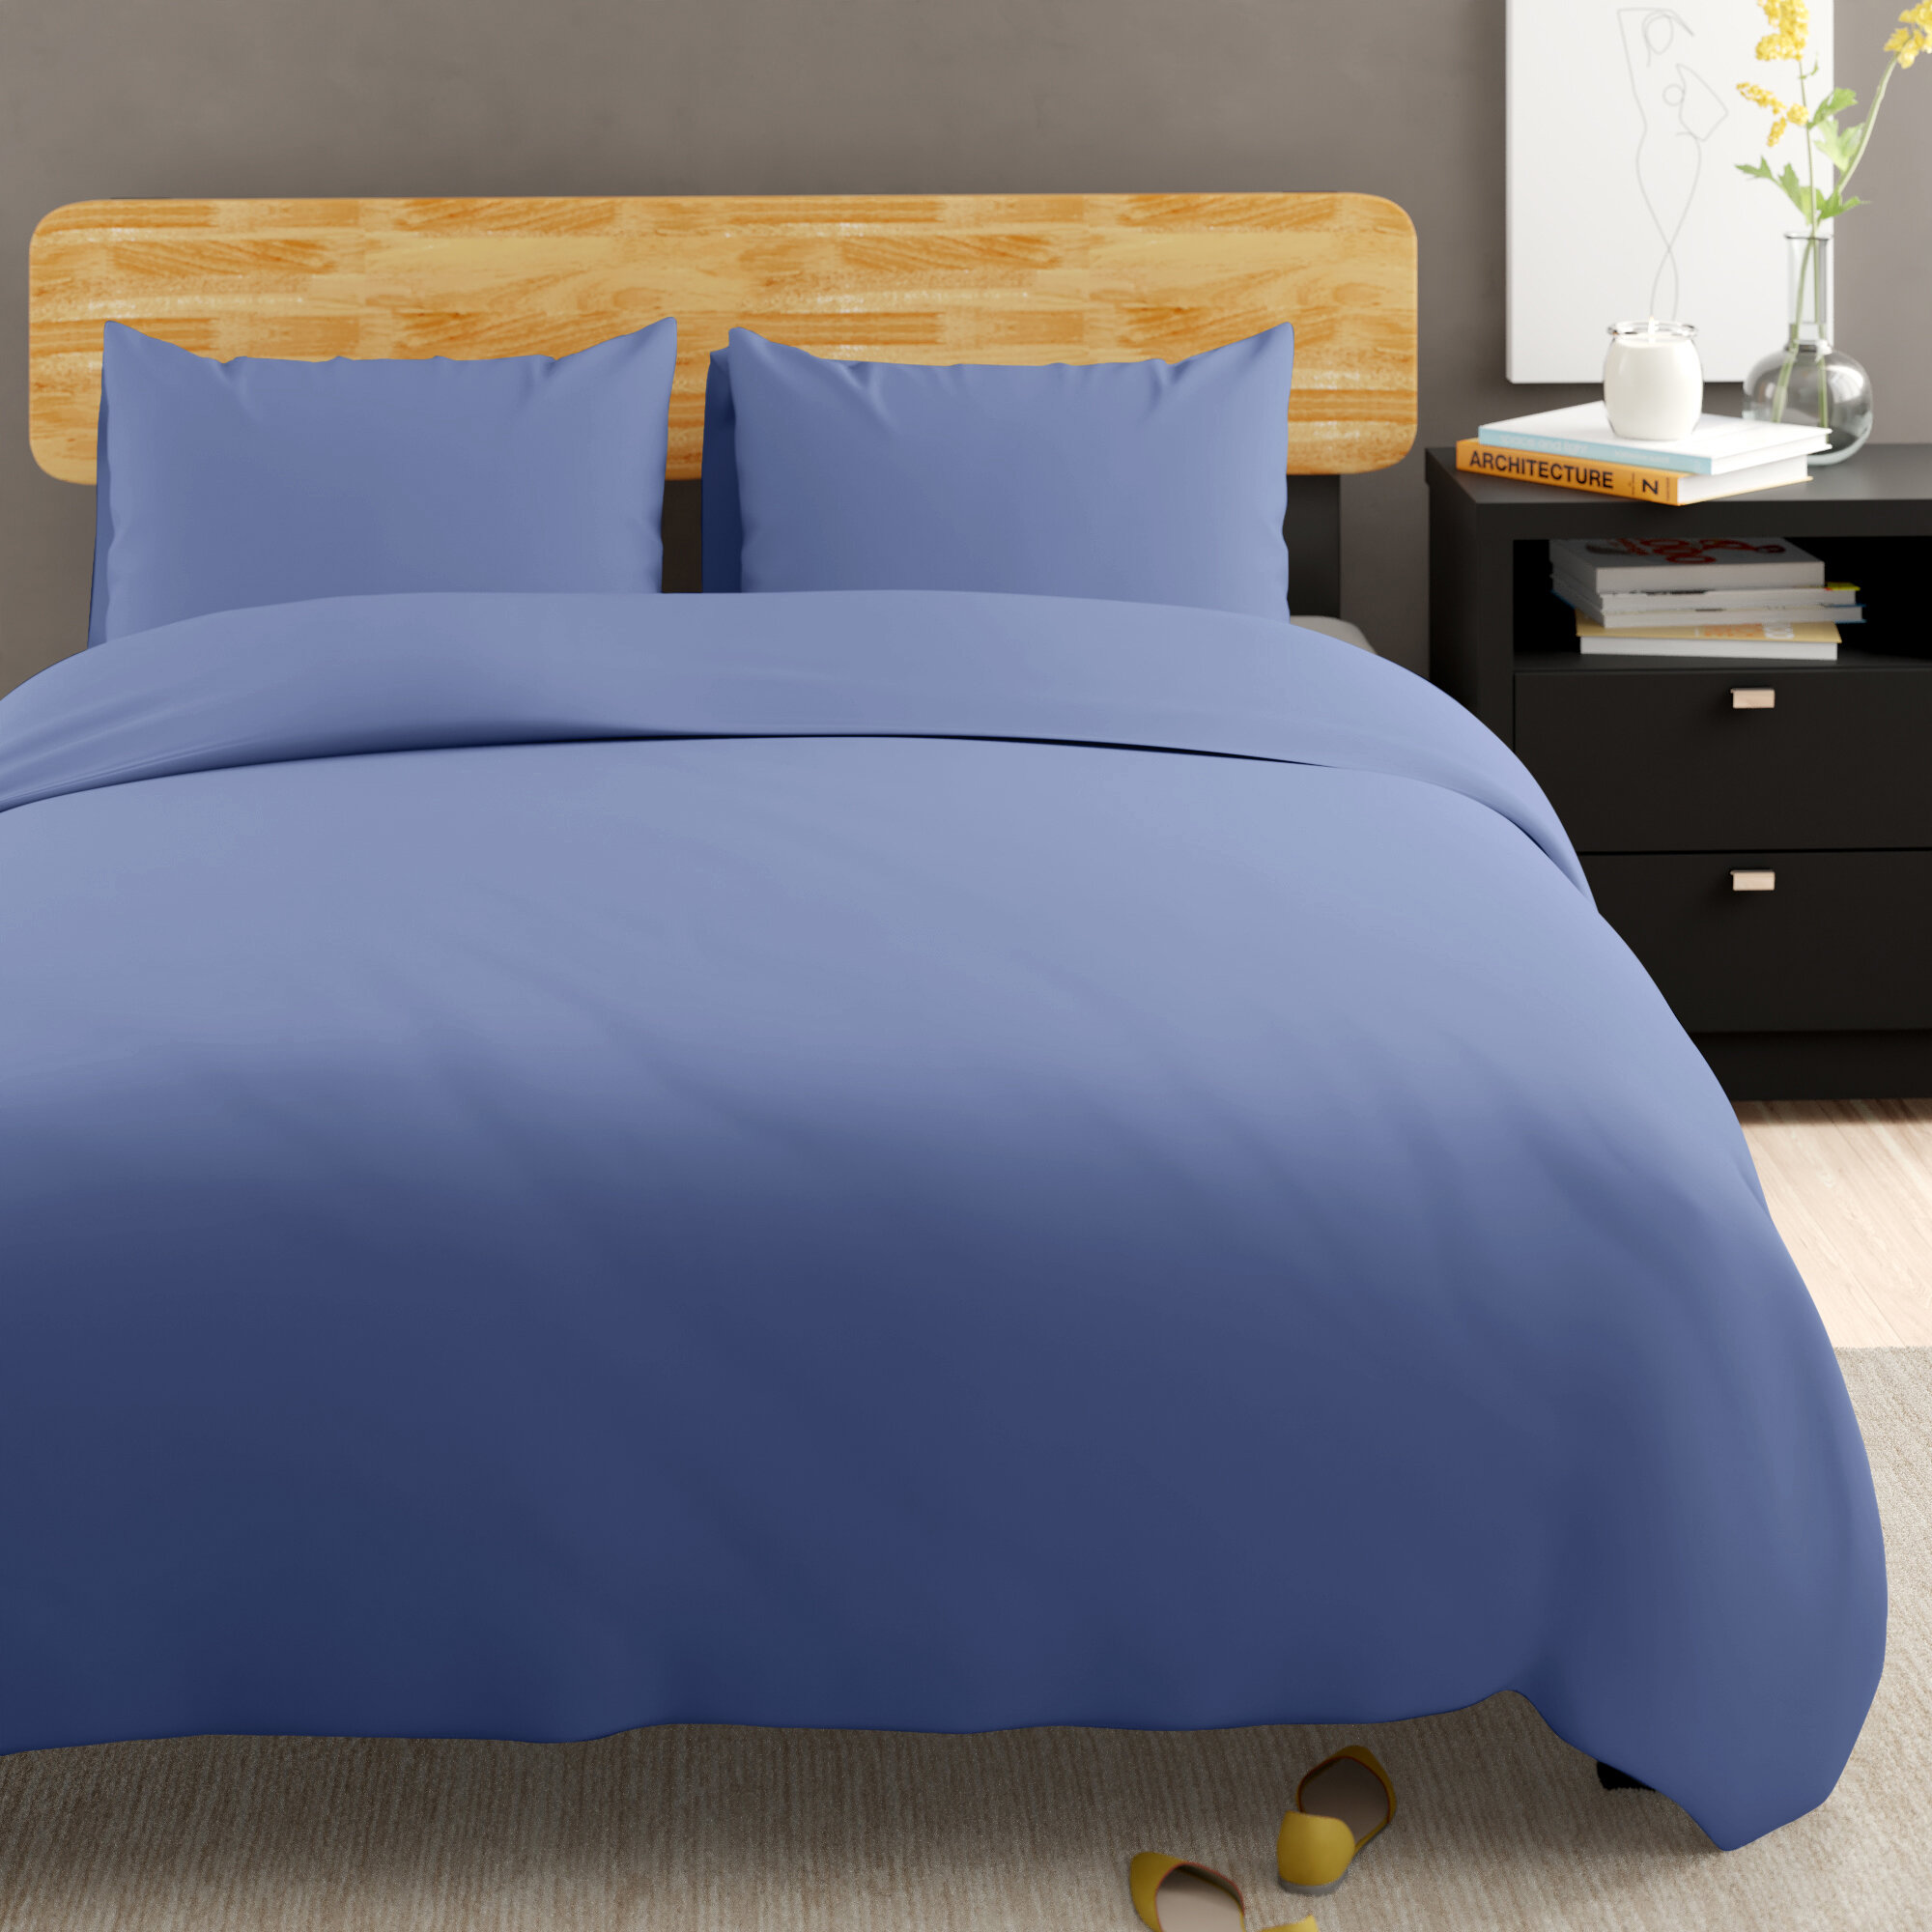 Twin Microfiber Comforter Star Wars Blue 64x86 Super Soft for sale online